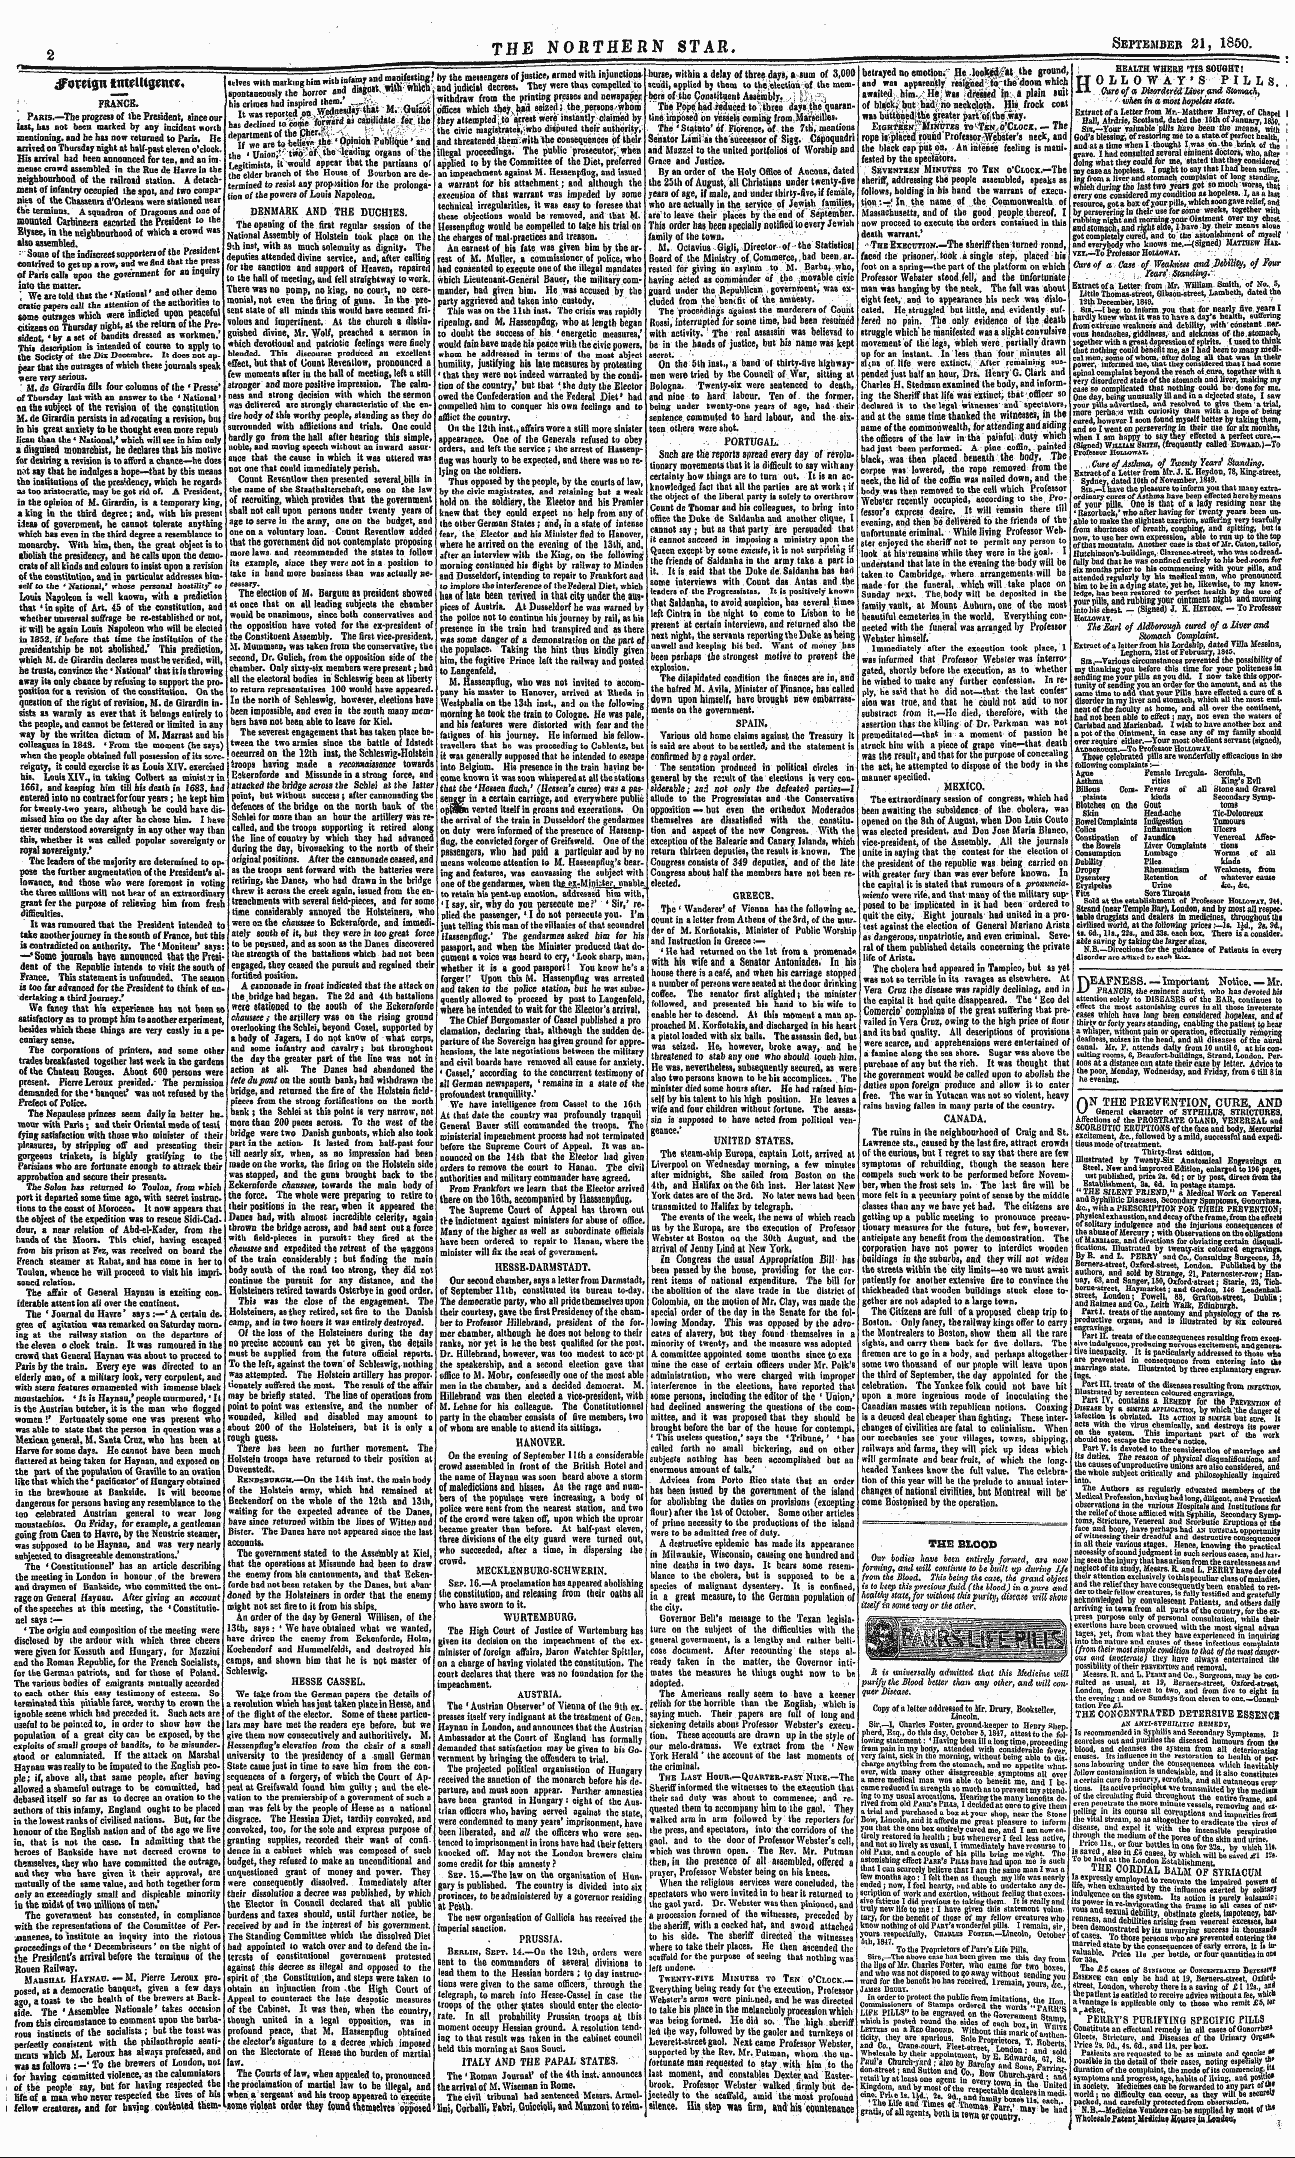 Northern Star (1837-1852): jS F Y, 3rd edition - ¦Thb Blood